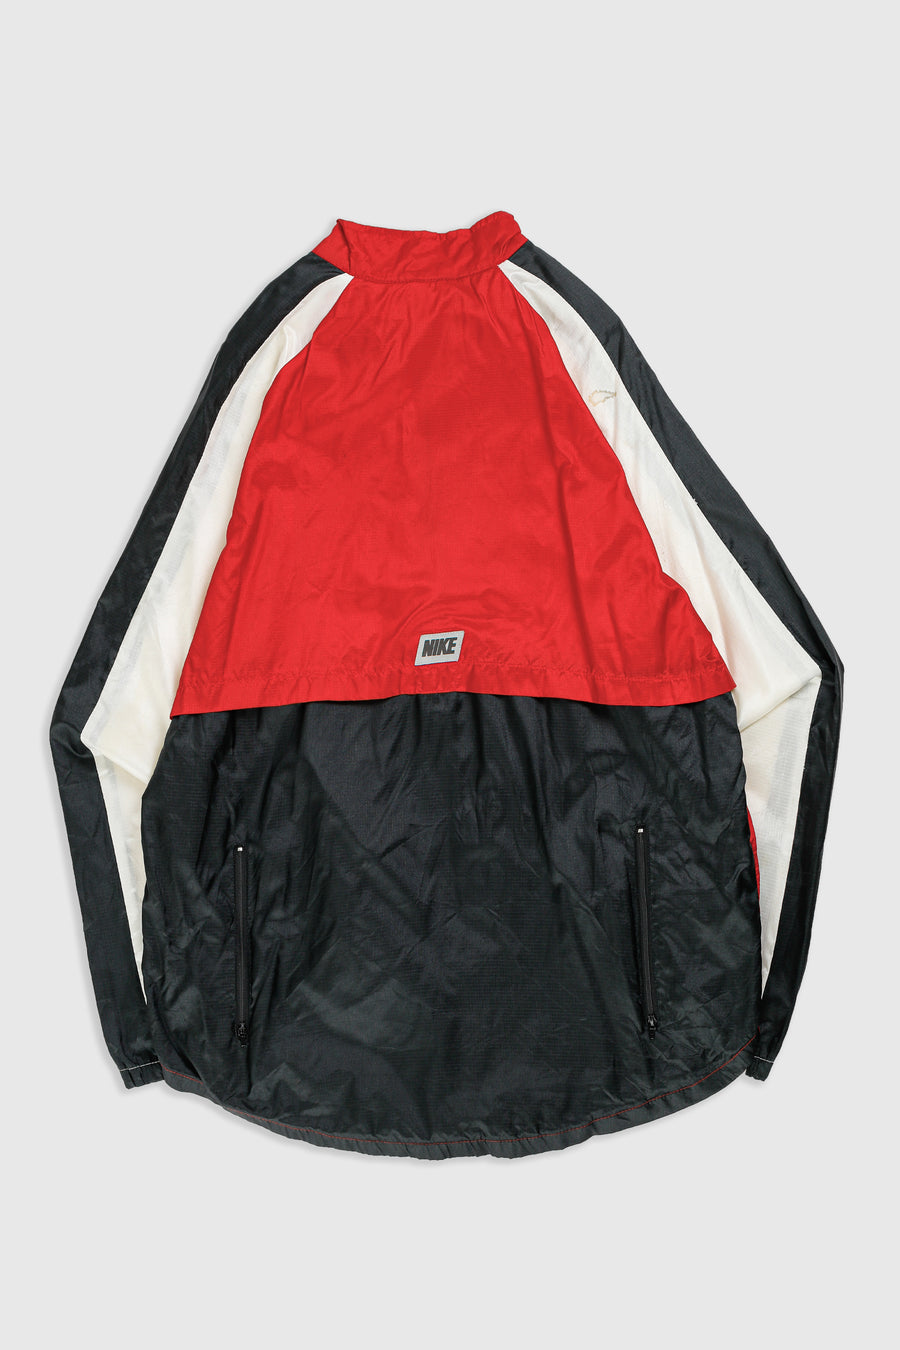 Vintage Nike Pullover Windbreaker Jacket - L